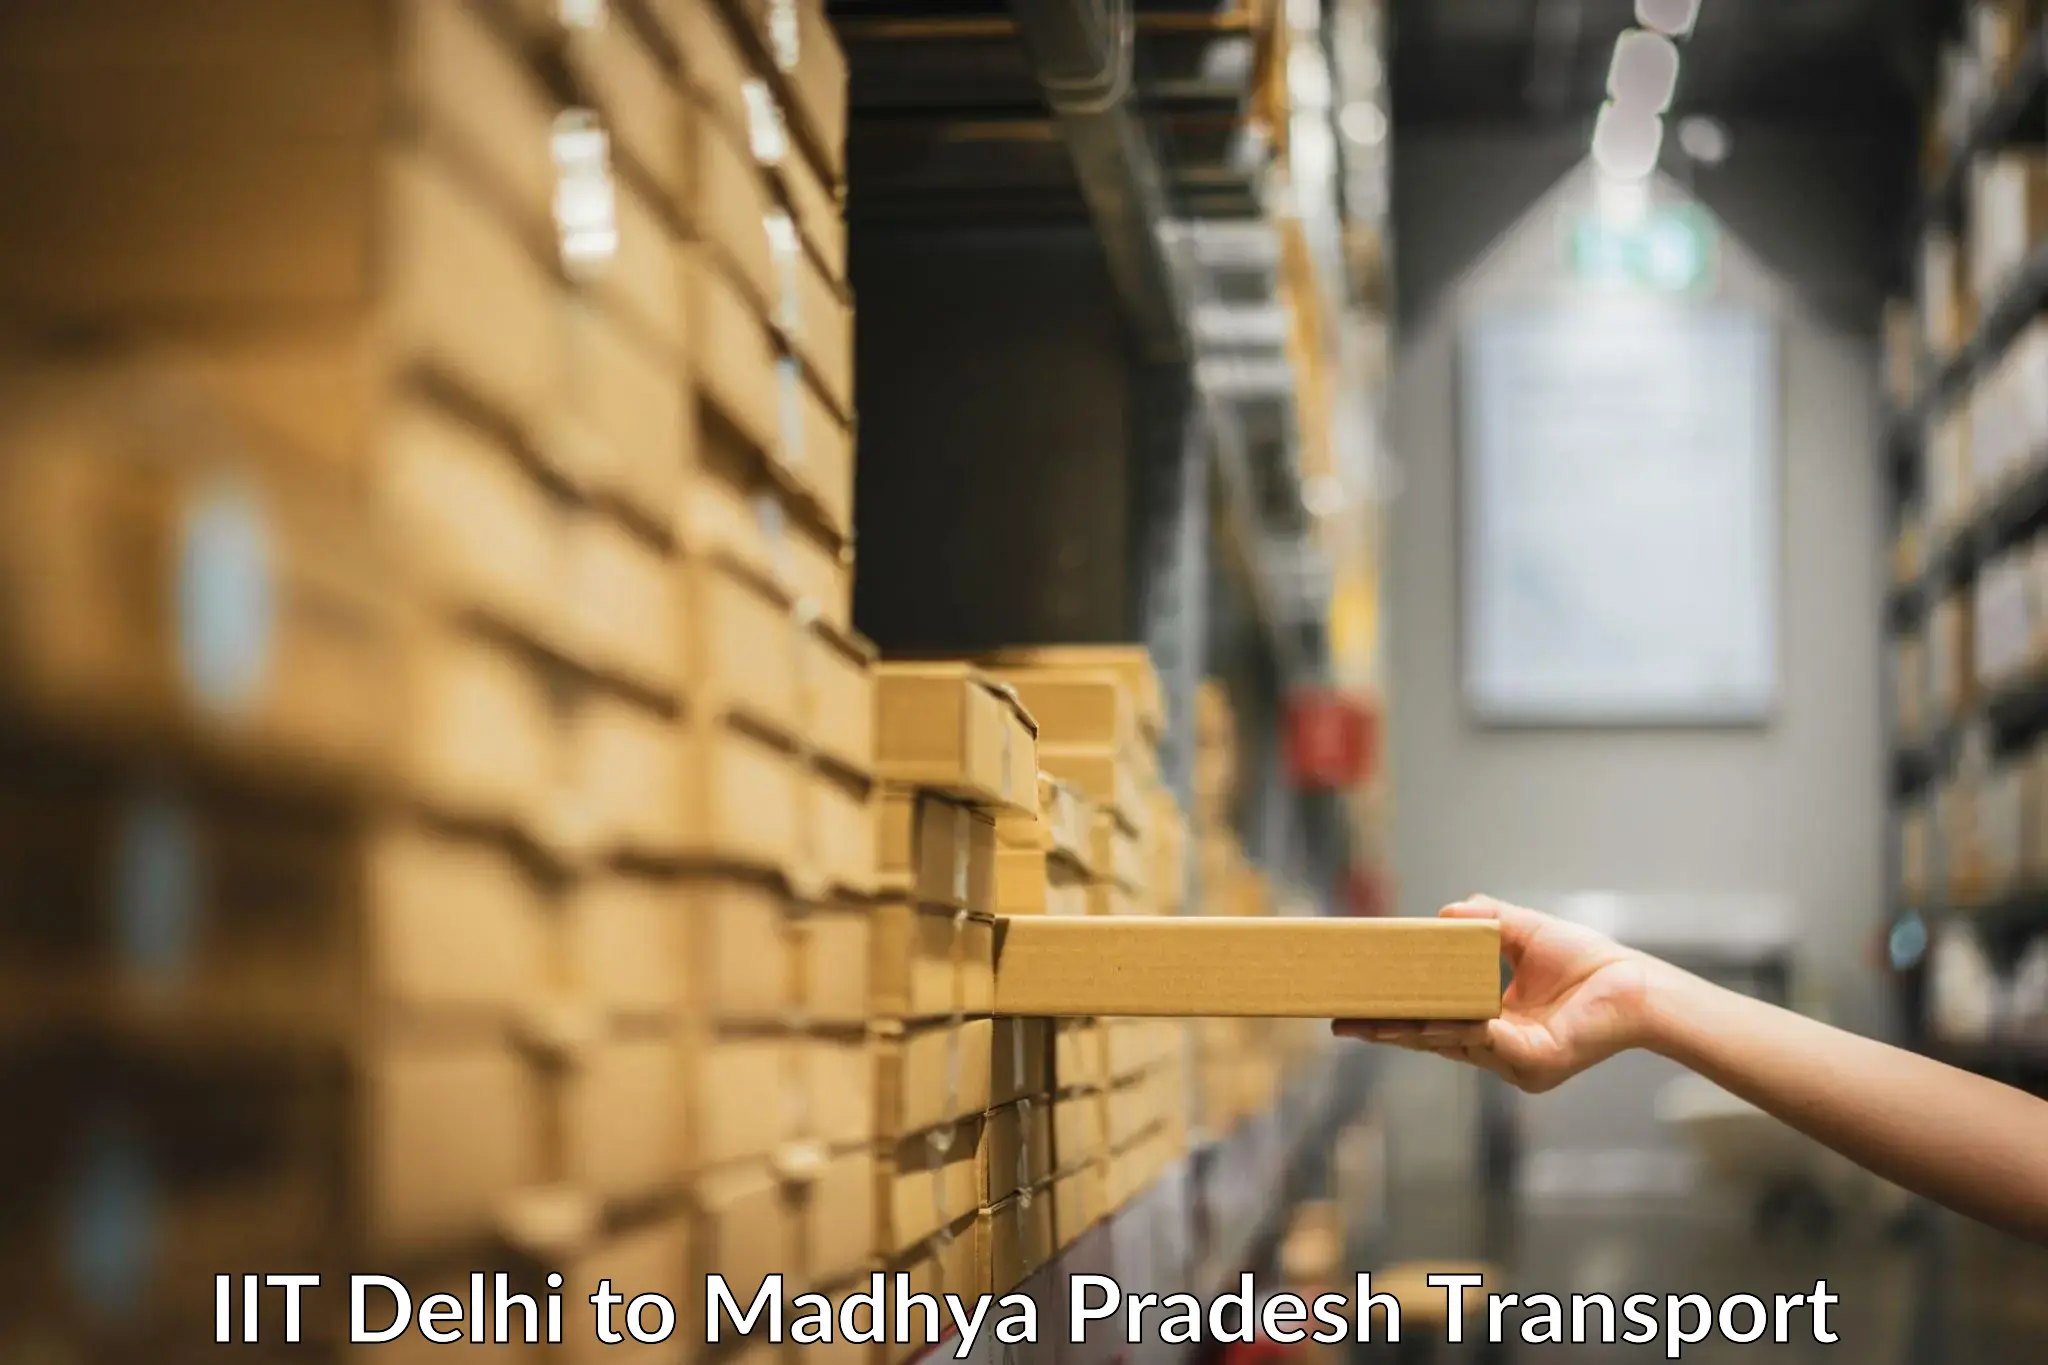 Nearest transport service IIT Delhi to Maheshwar